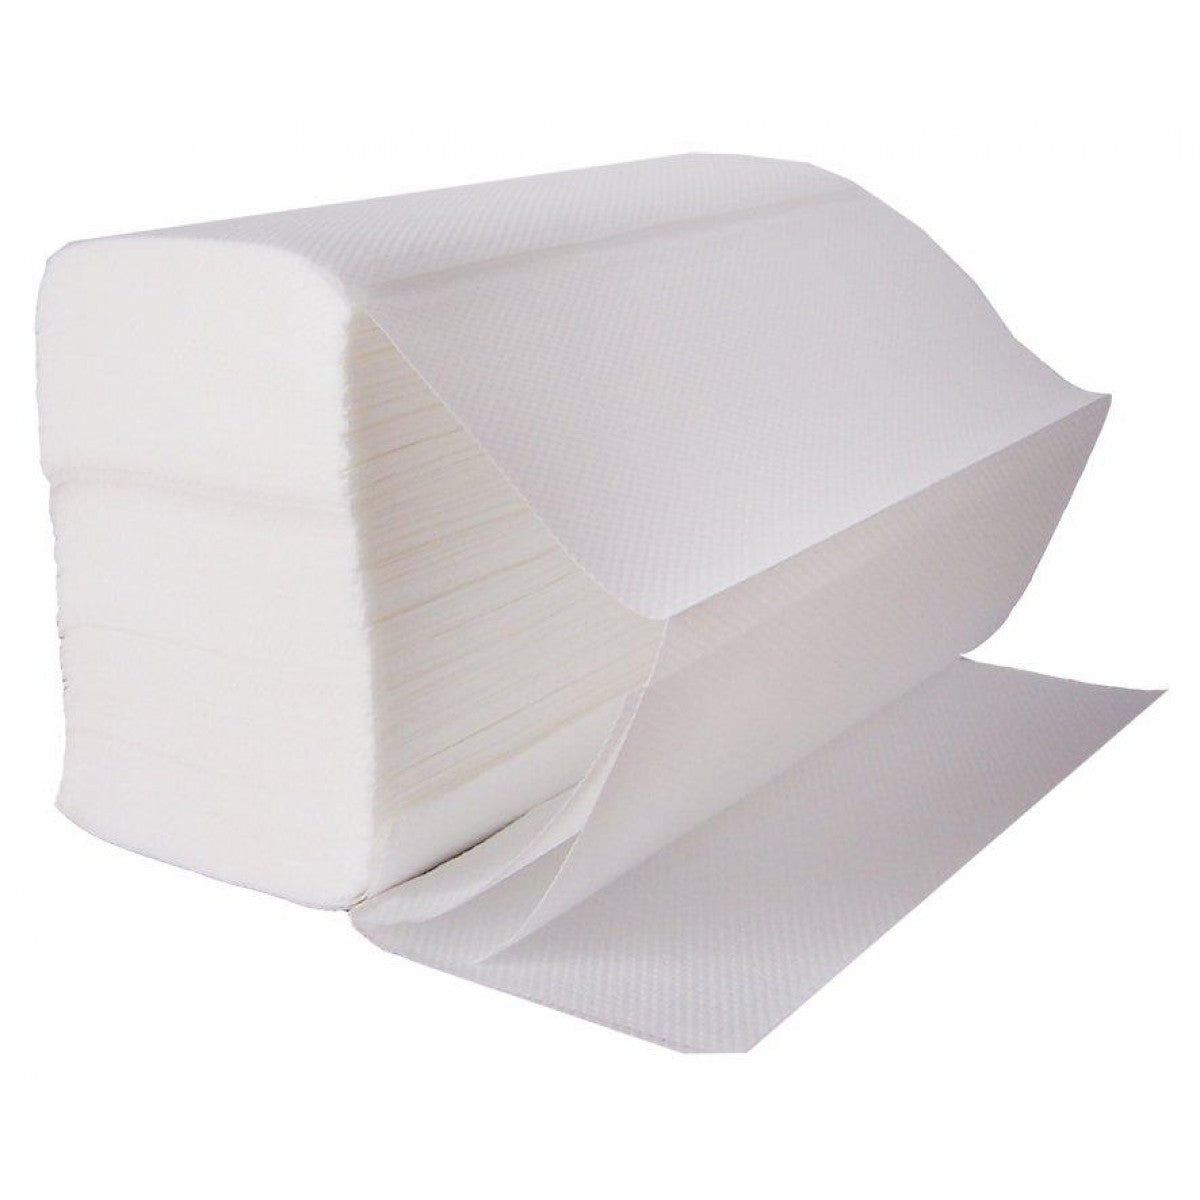 Z-Fold Paper Hand Towel - 2 Ply - White x 3,000